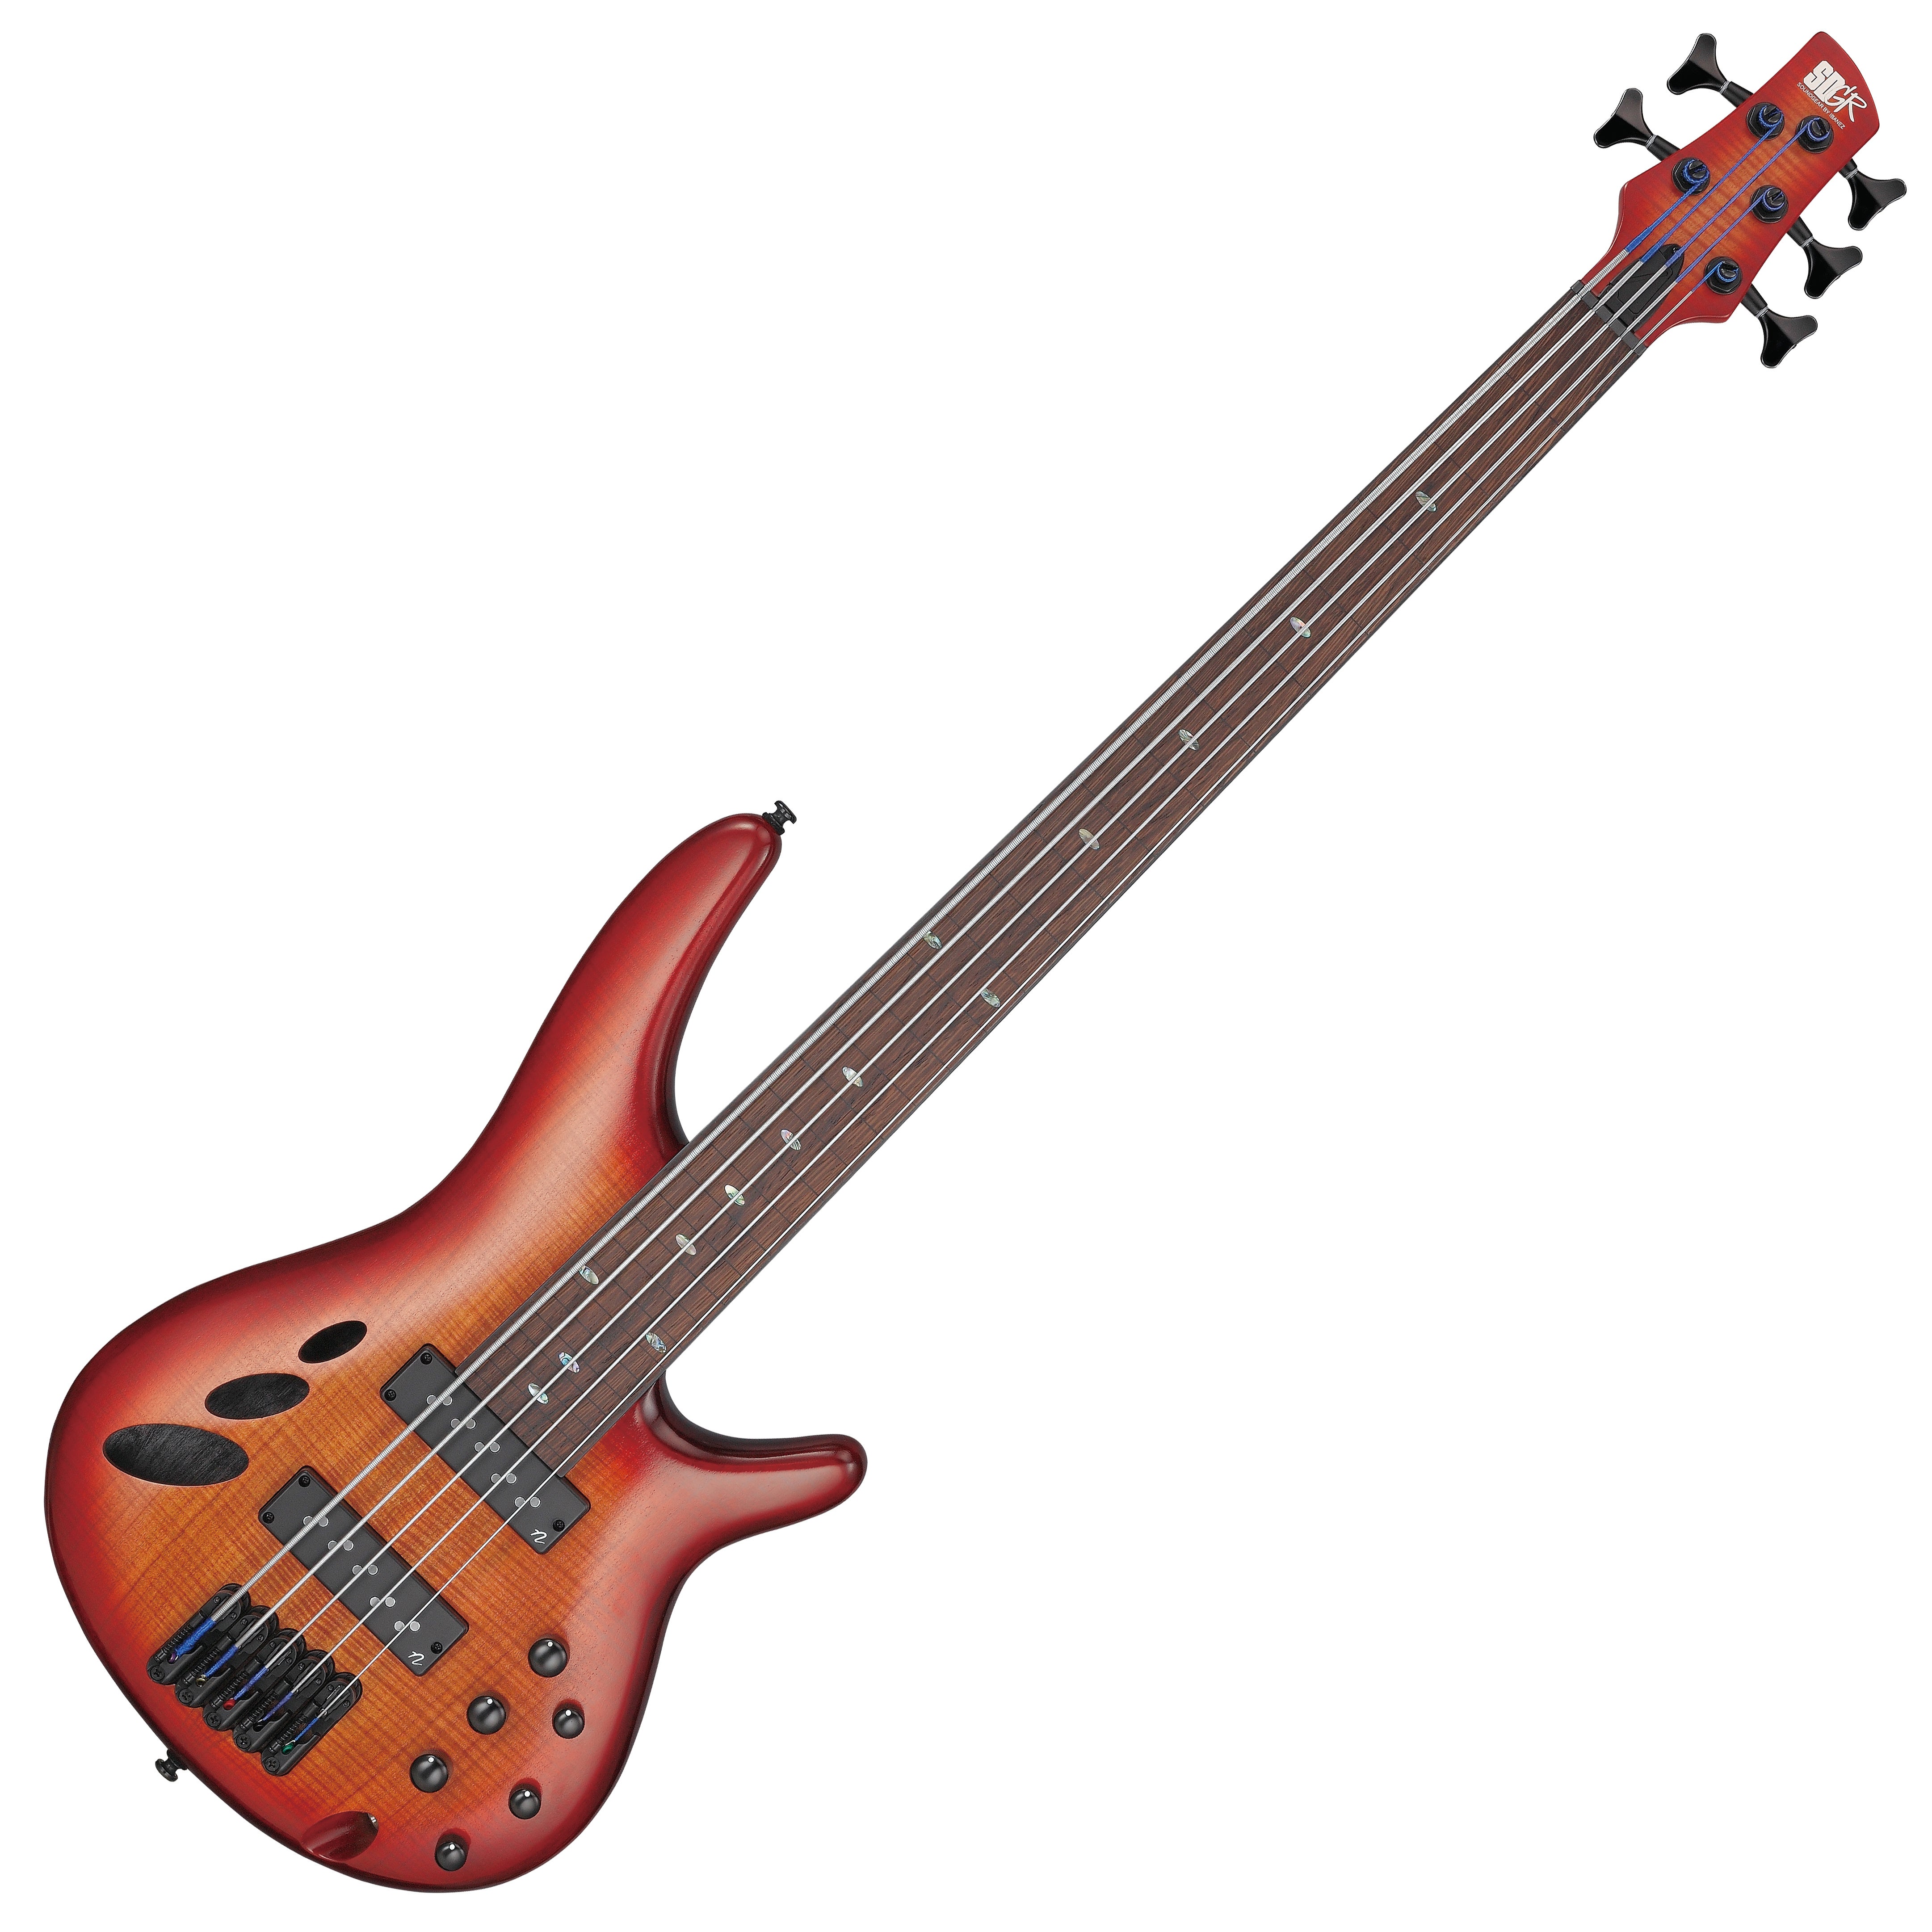 Ibanez Srd905f Fretless 5-string Bass Guitar - Brown Topaz Burst 